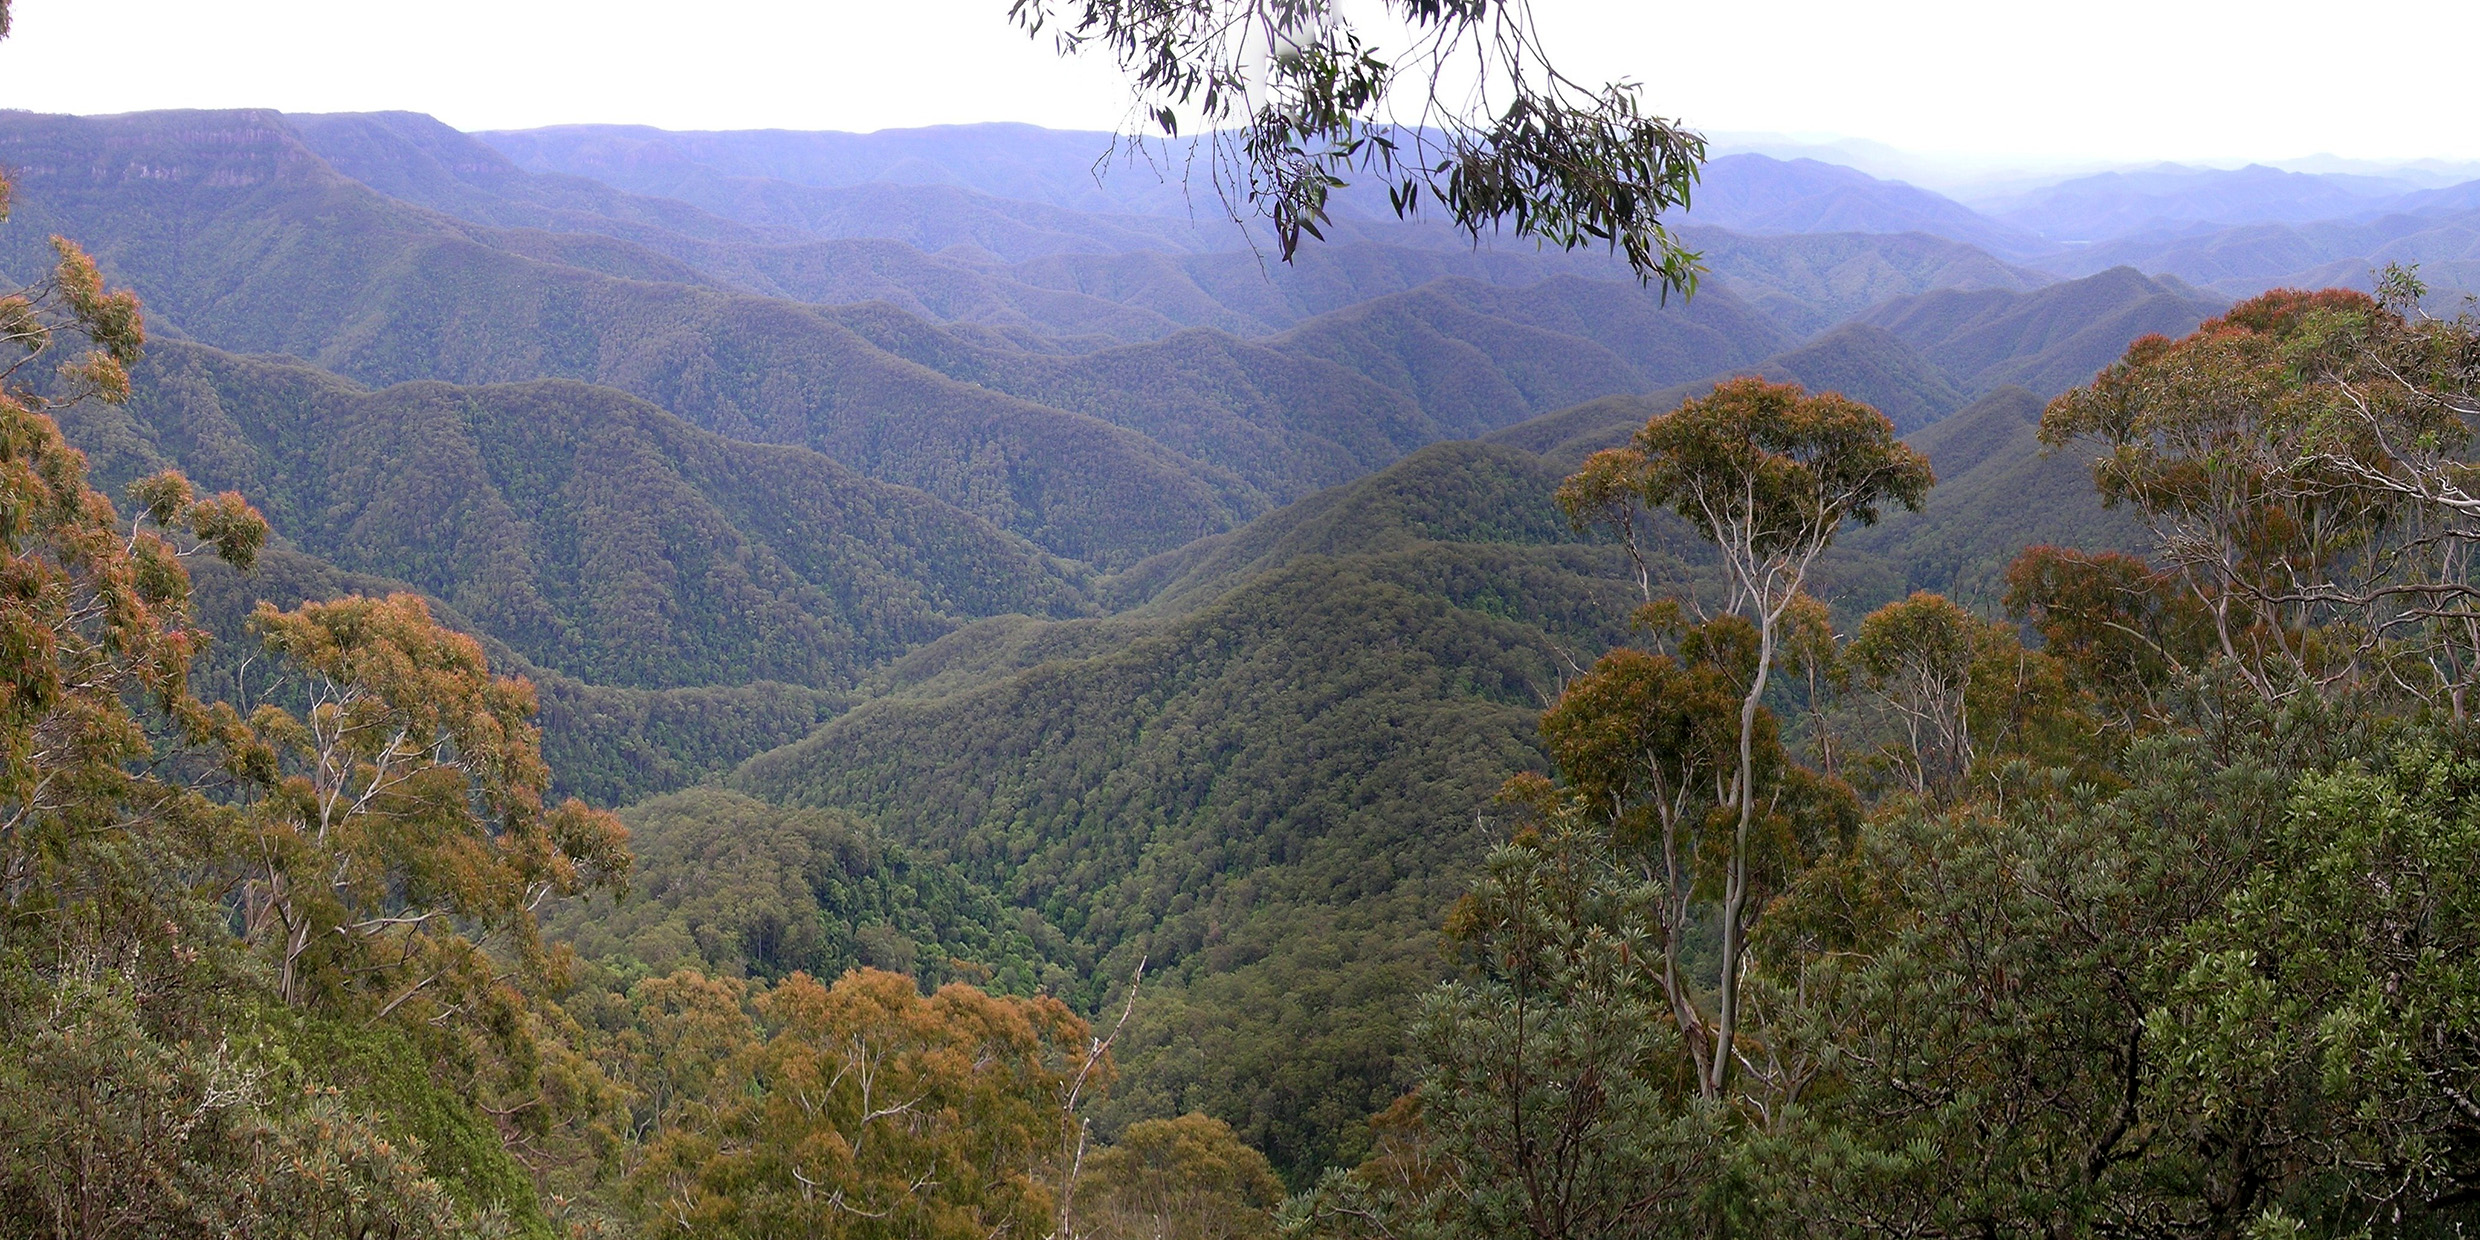 Image of Gondwana rainforest in present day Australia